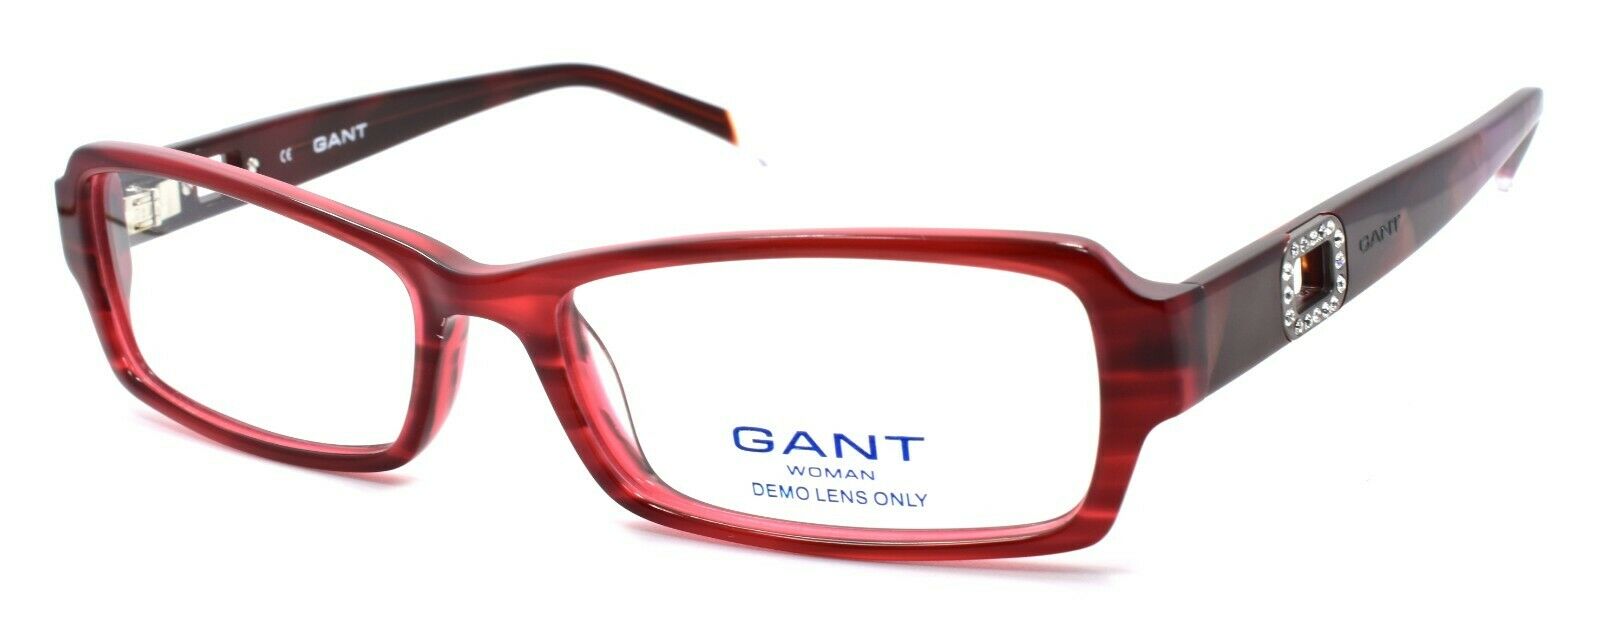 1-GANT GW Fern ST Women's Eyeglasses Frames 52-15-140 Red-715583288409-IKSpecs